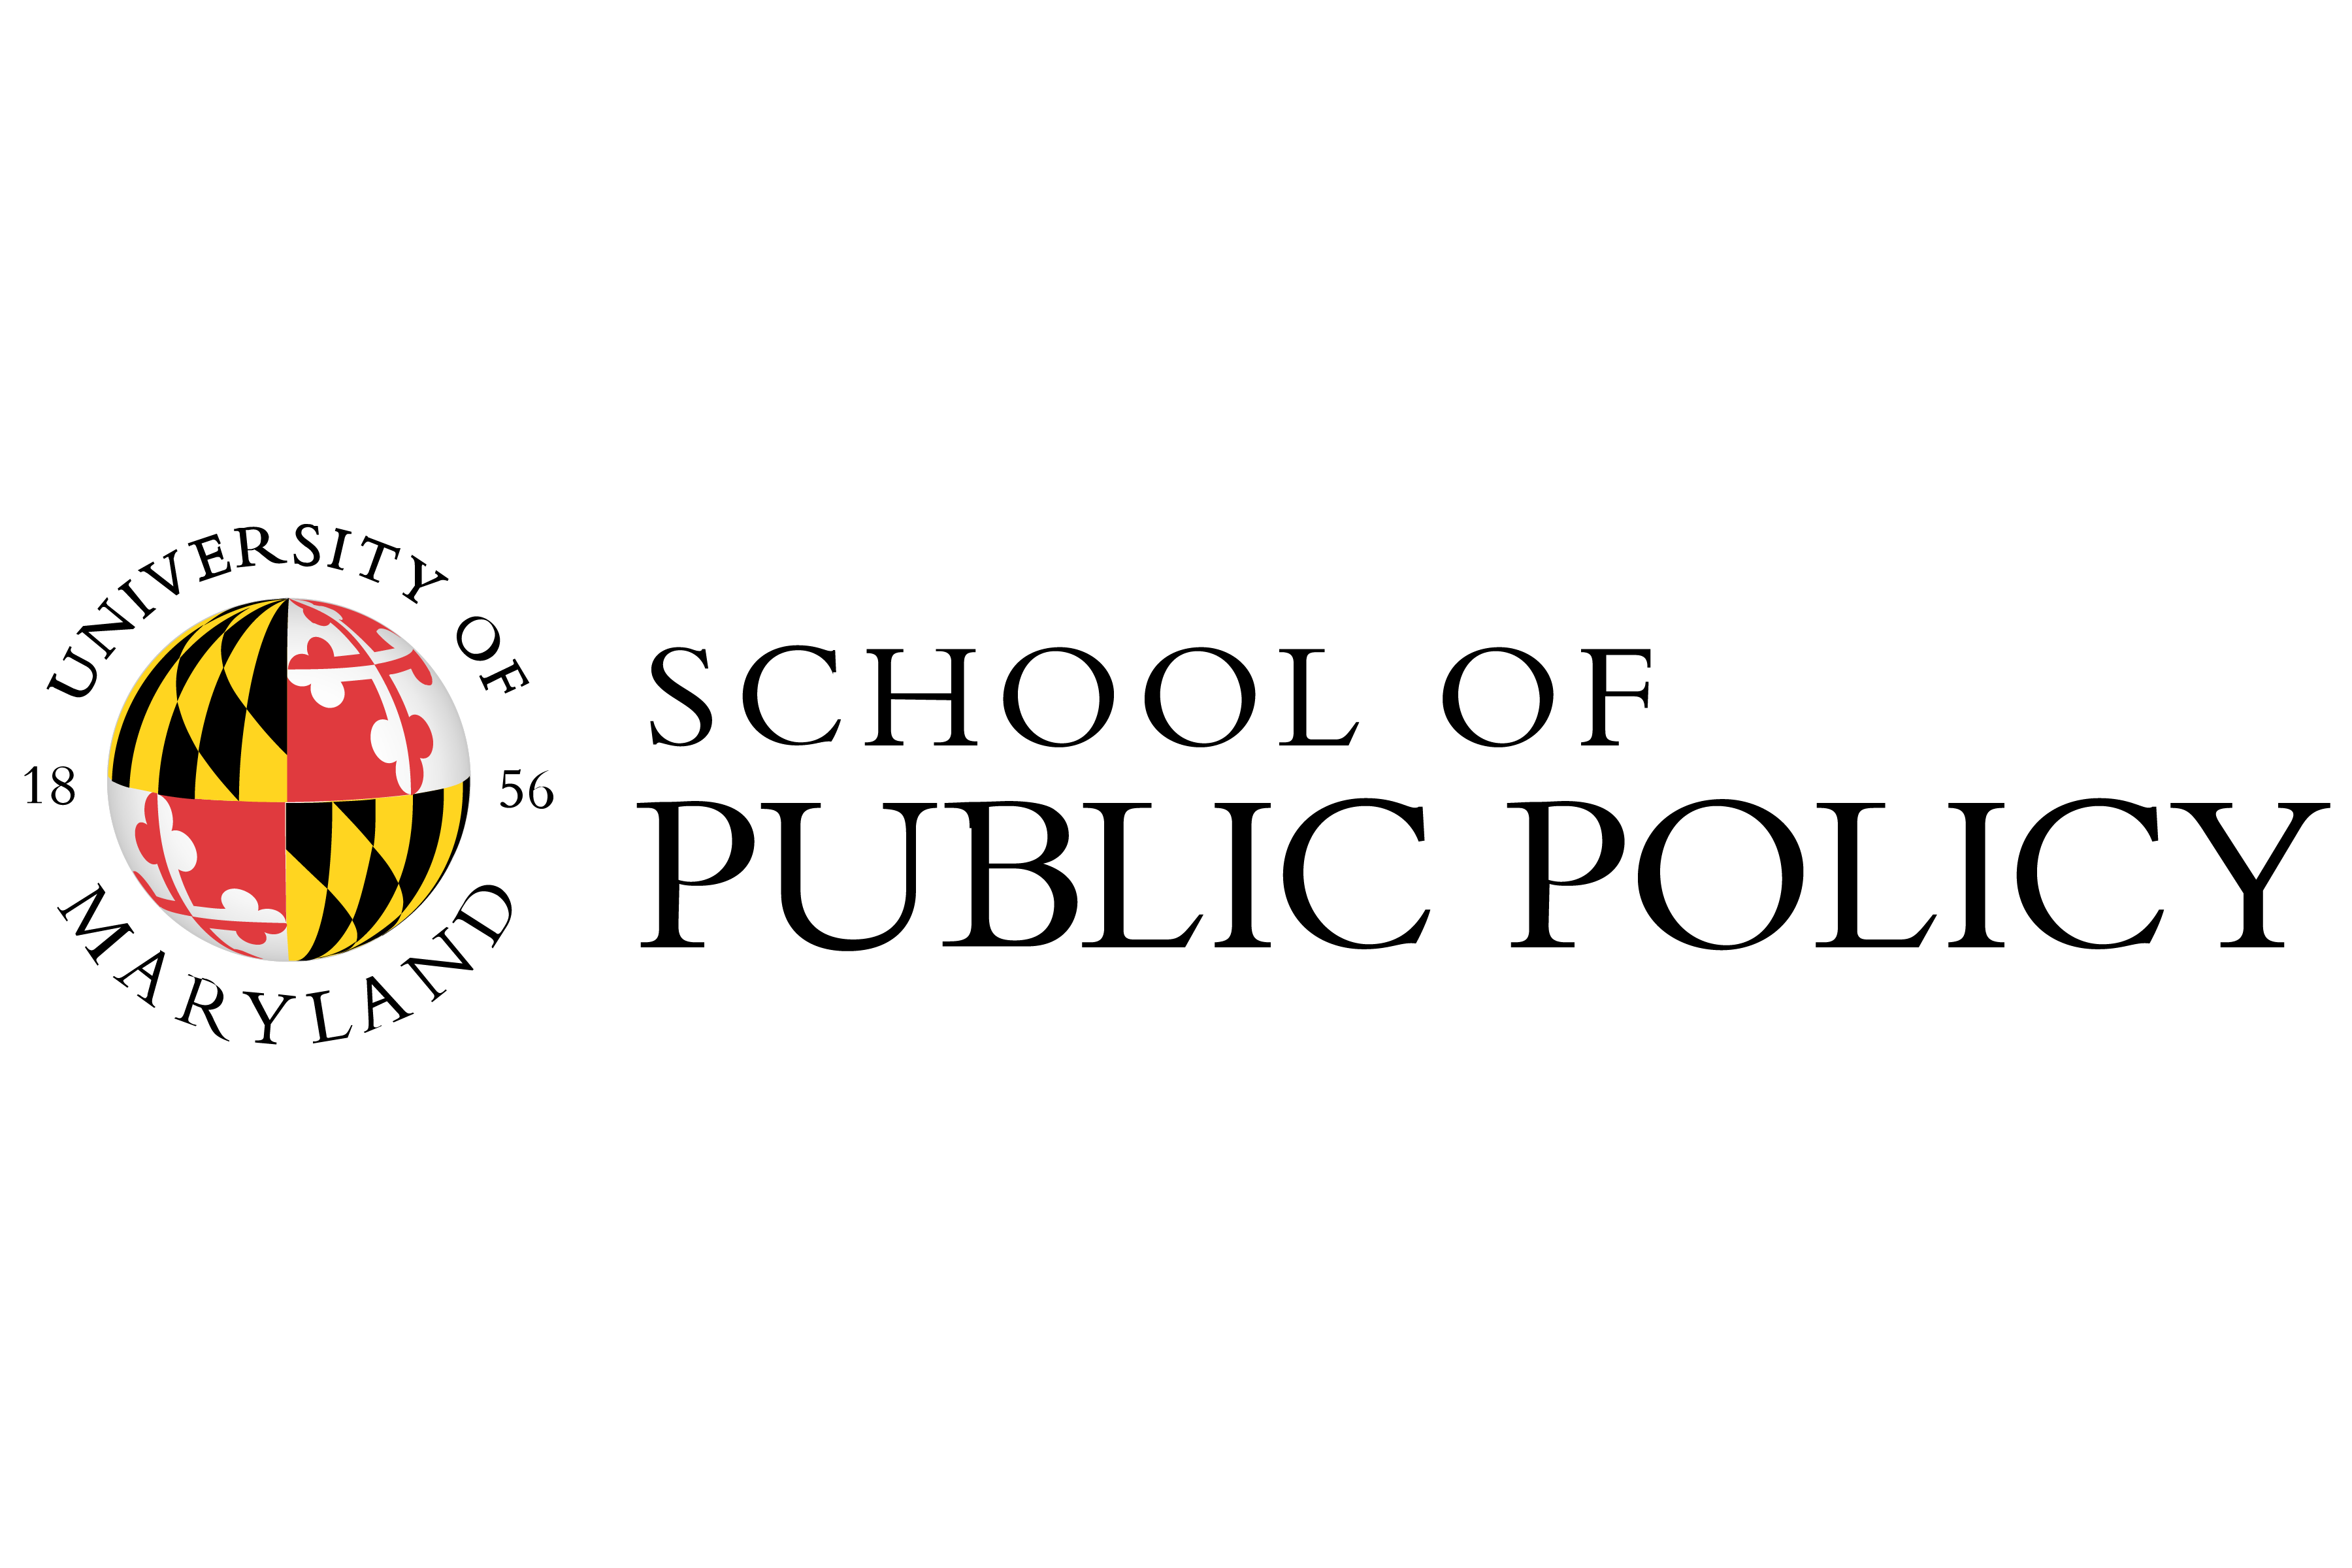 UMD School of Public Policy